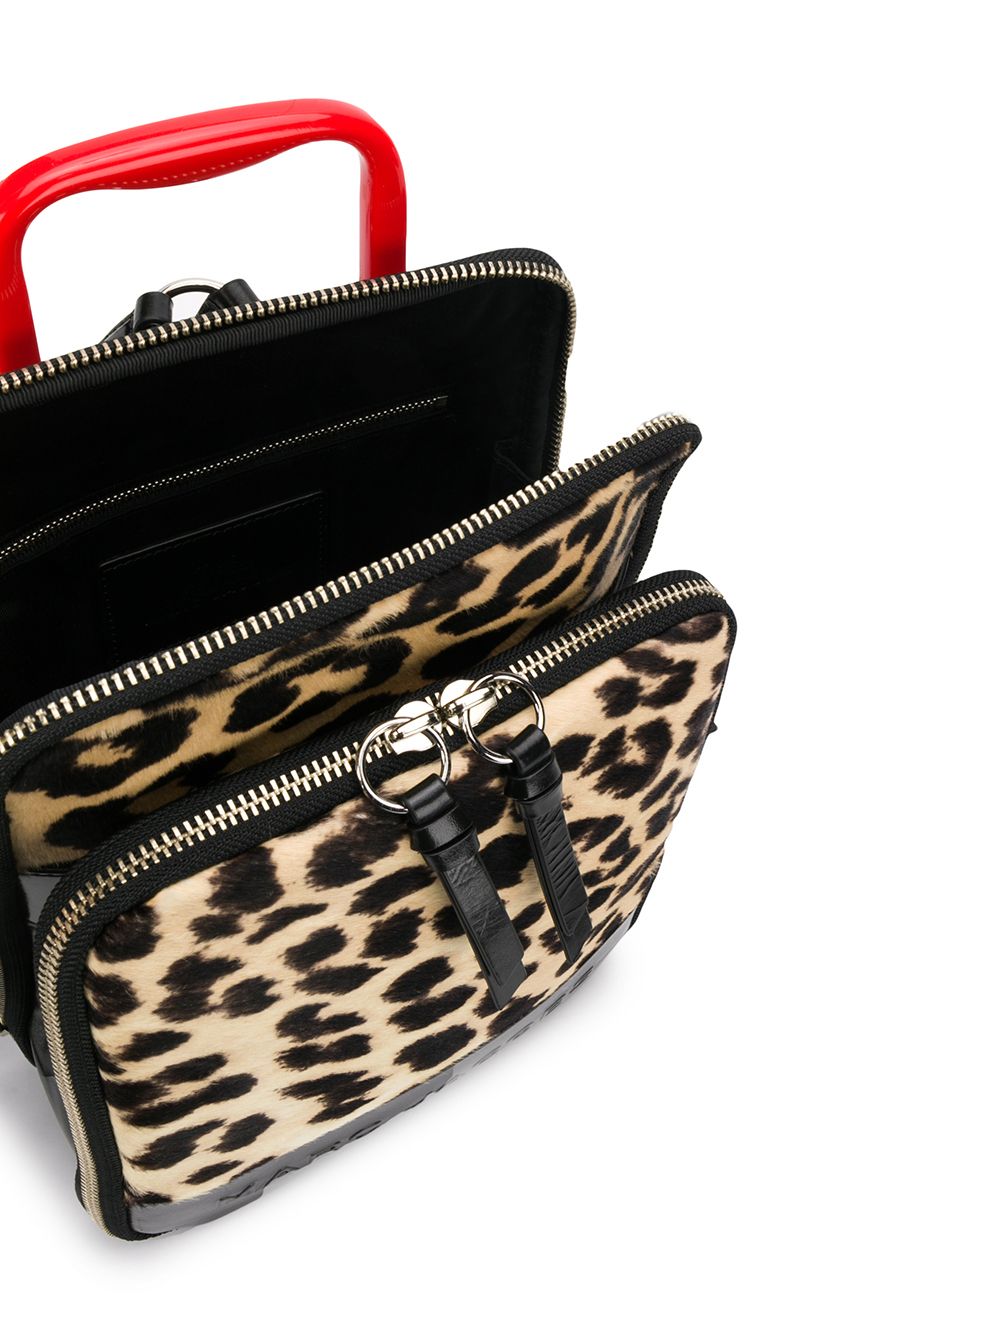 фото Marc jacobs рюкзак с леопардовым принтом